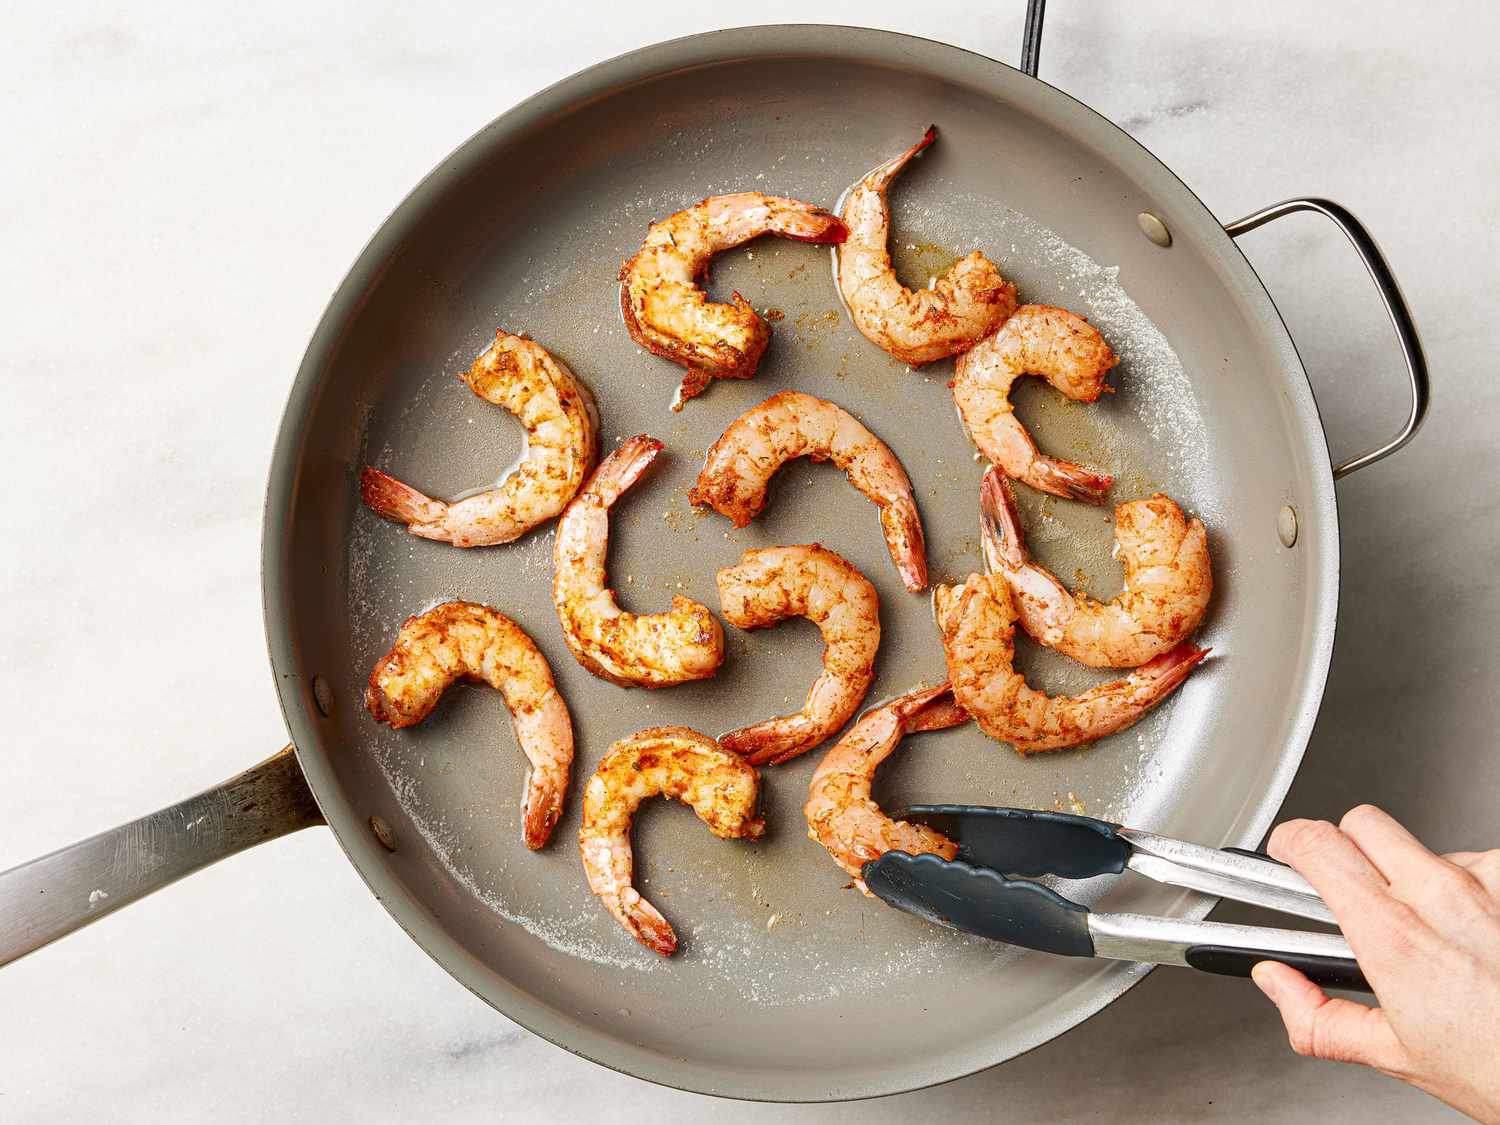 Shrimp in a nonstick pan.